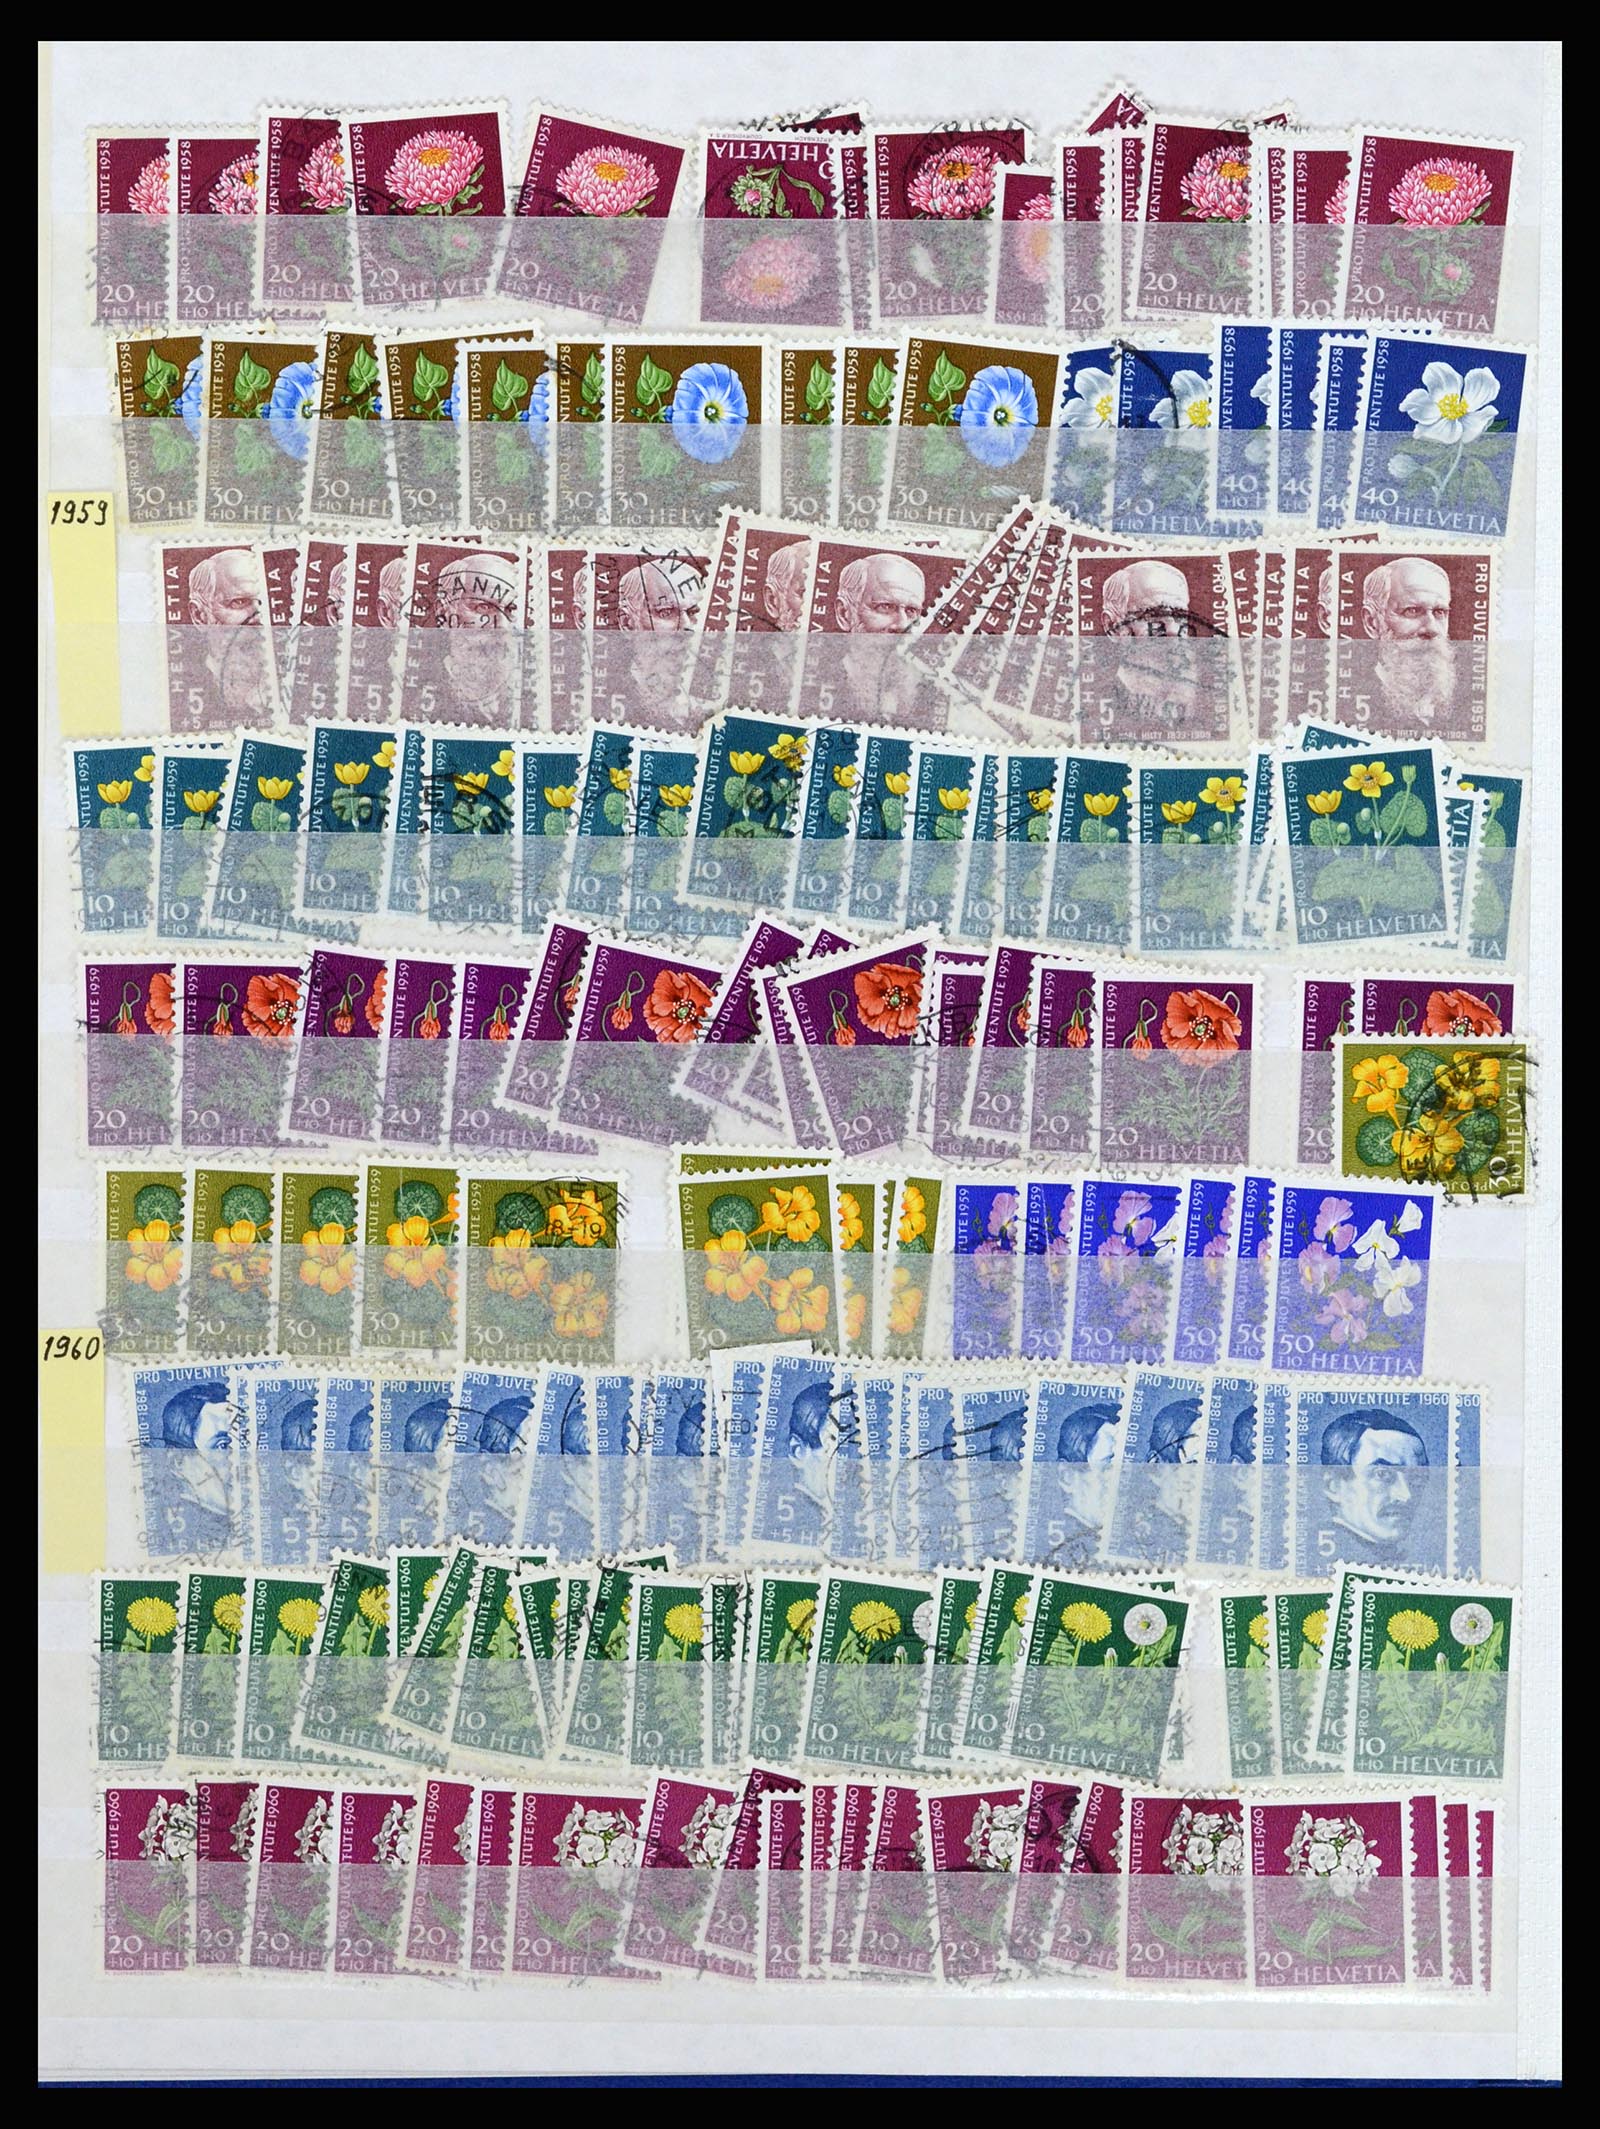 37061 014 - Stamp collection 37061 Switzerland 1913-2000.